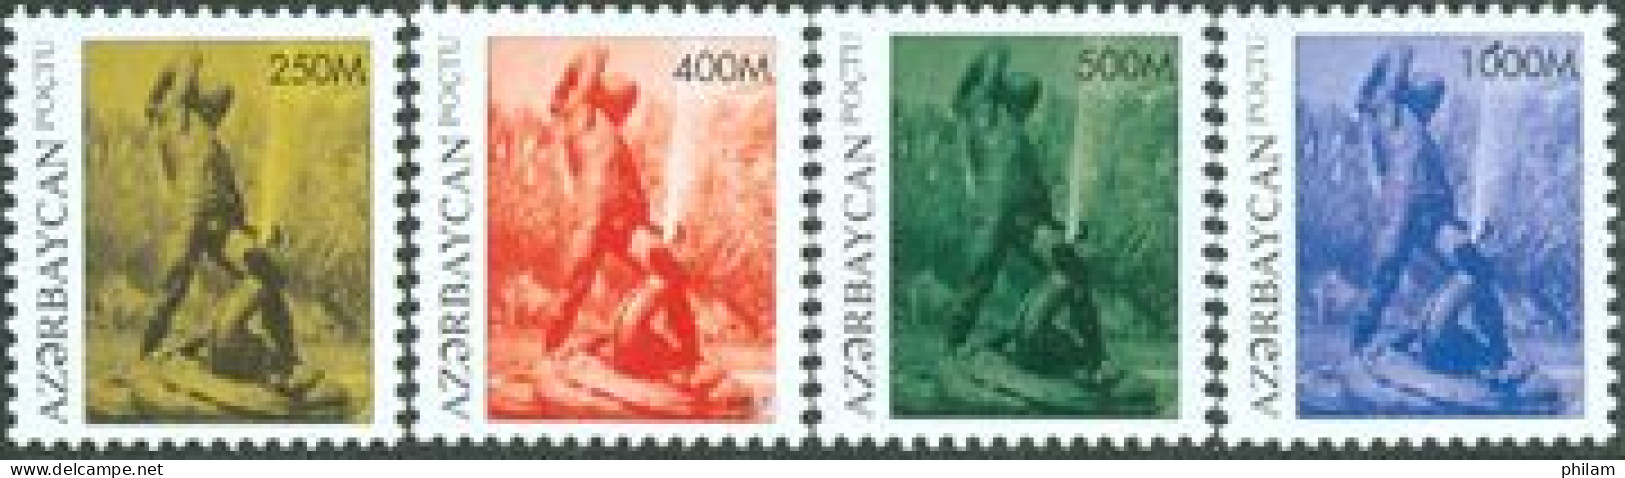 AZERBAIDJAN 1996 - Courante - Fontaine Sculptée - Légende - Azerbaijan